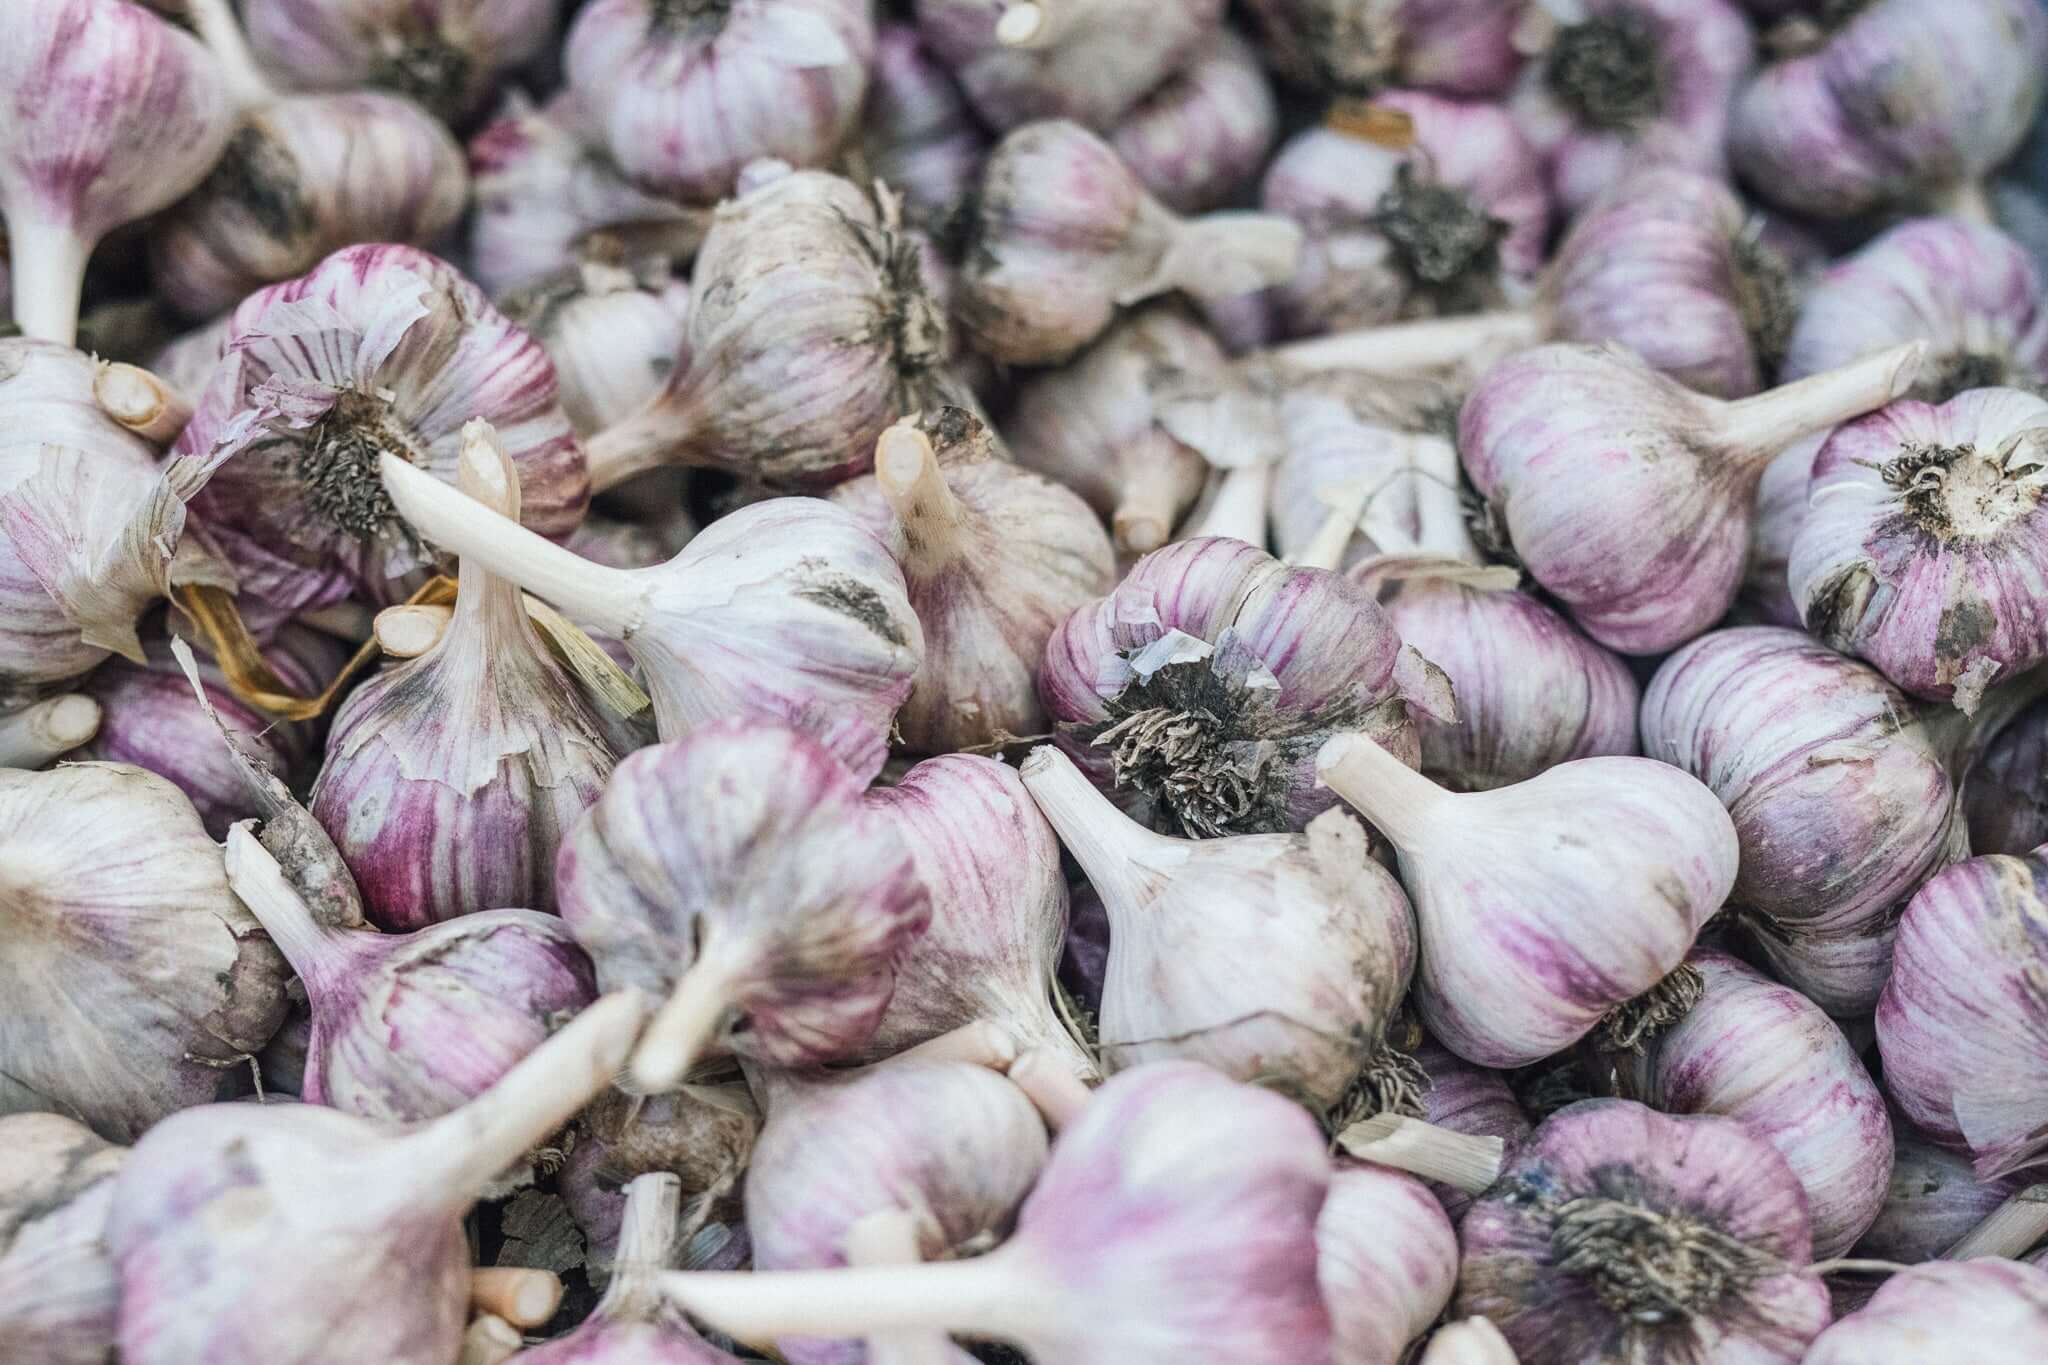 large amounts of fresh organic garlic, trimmed garlic for sale